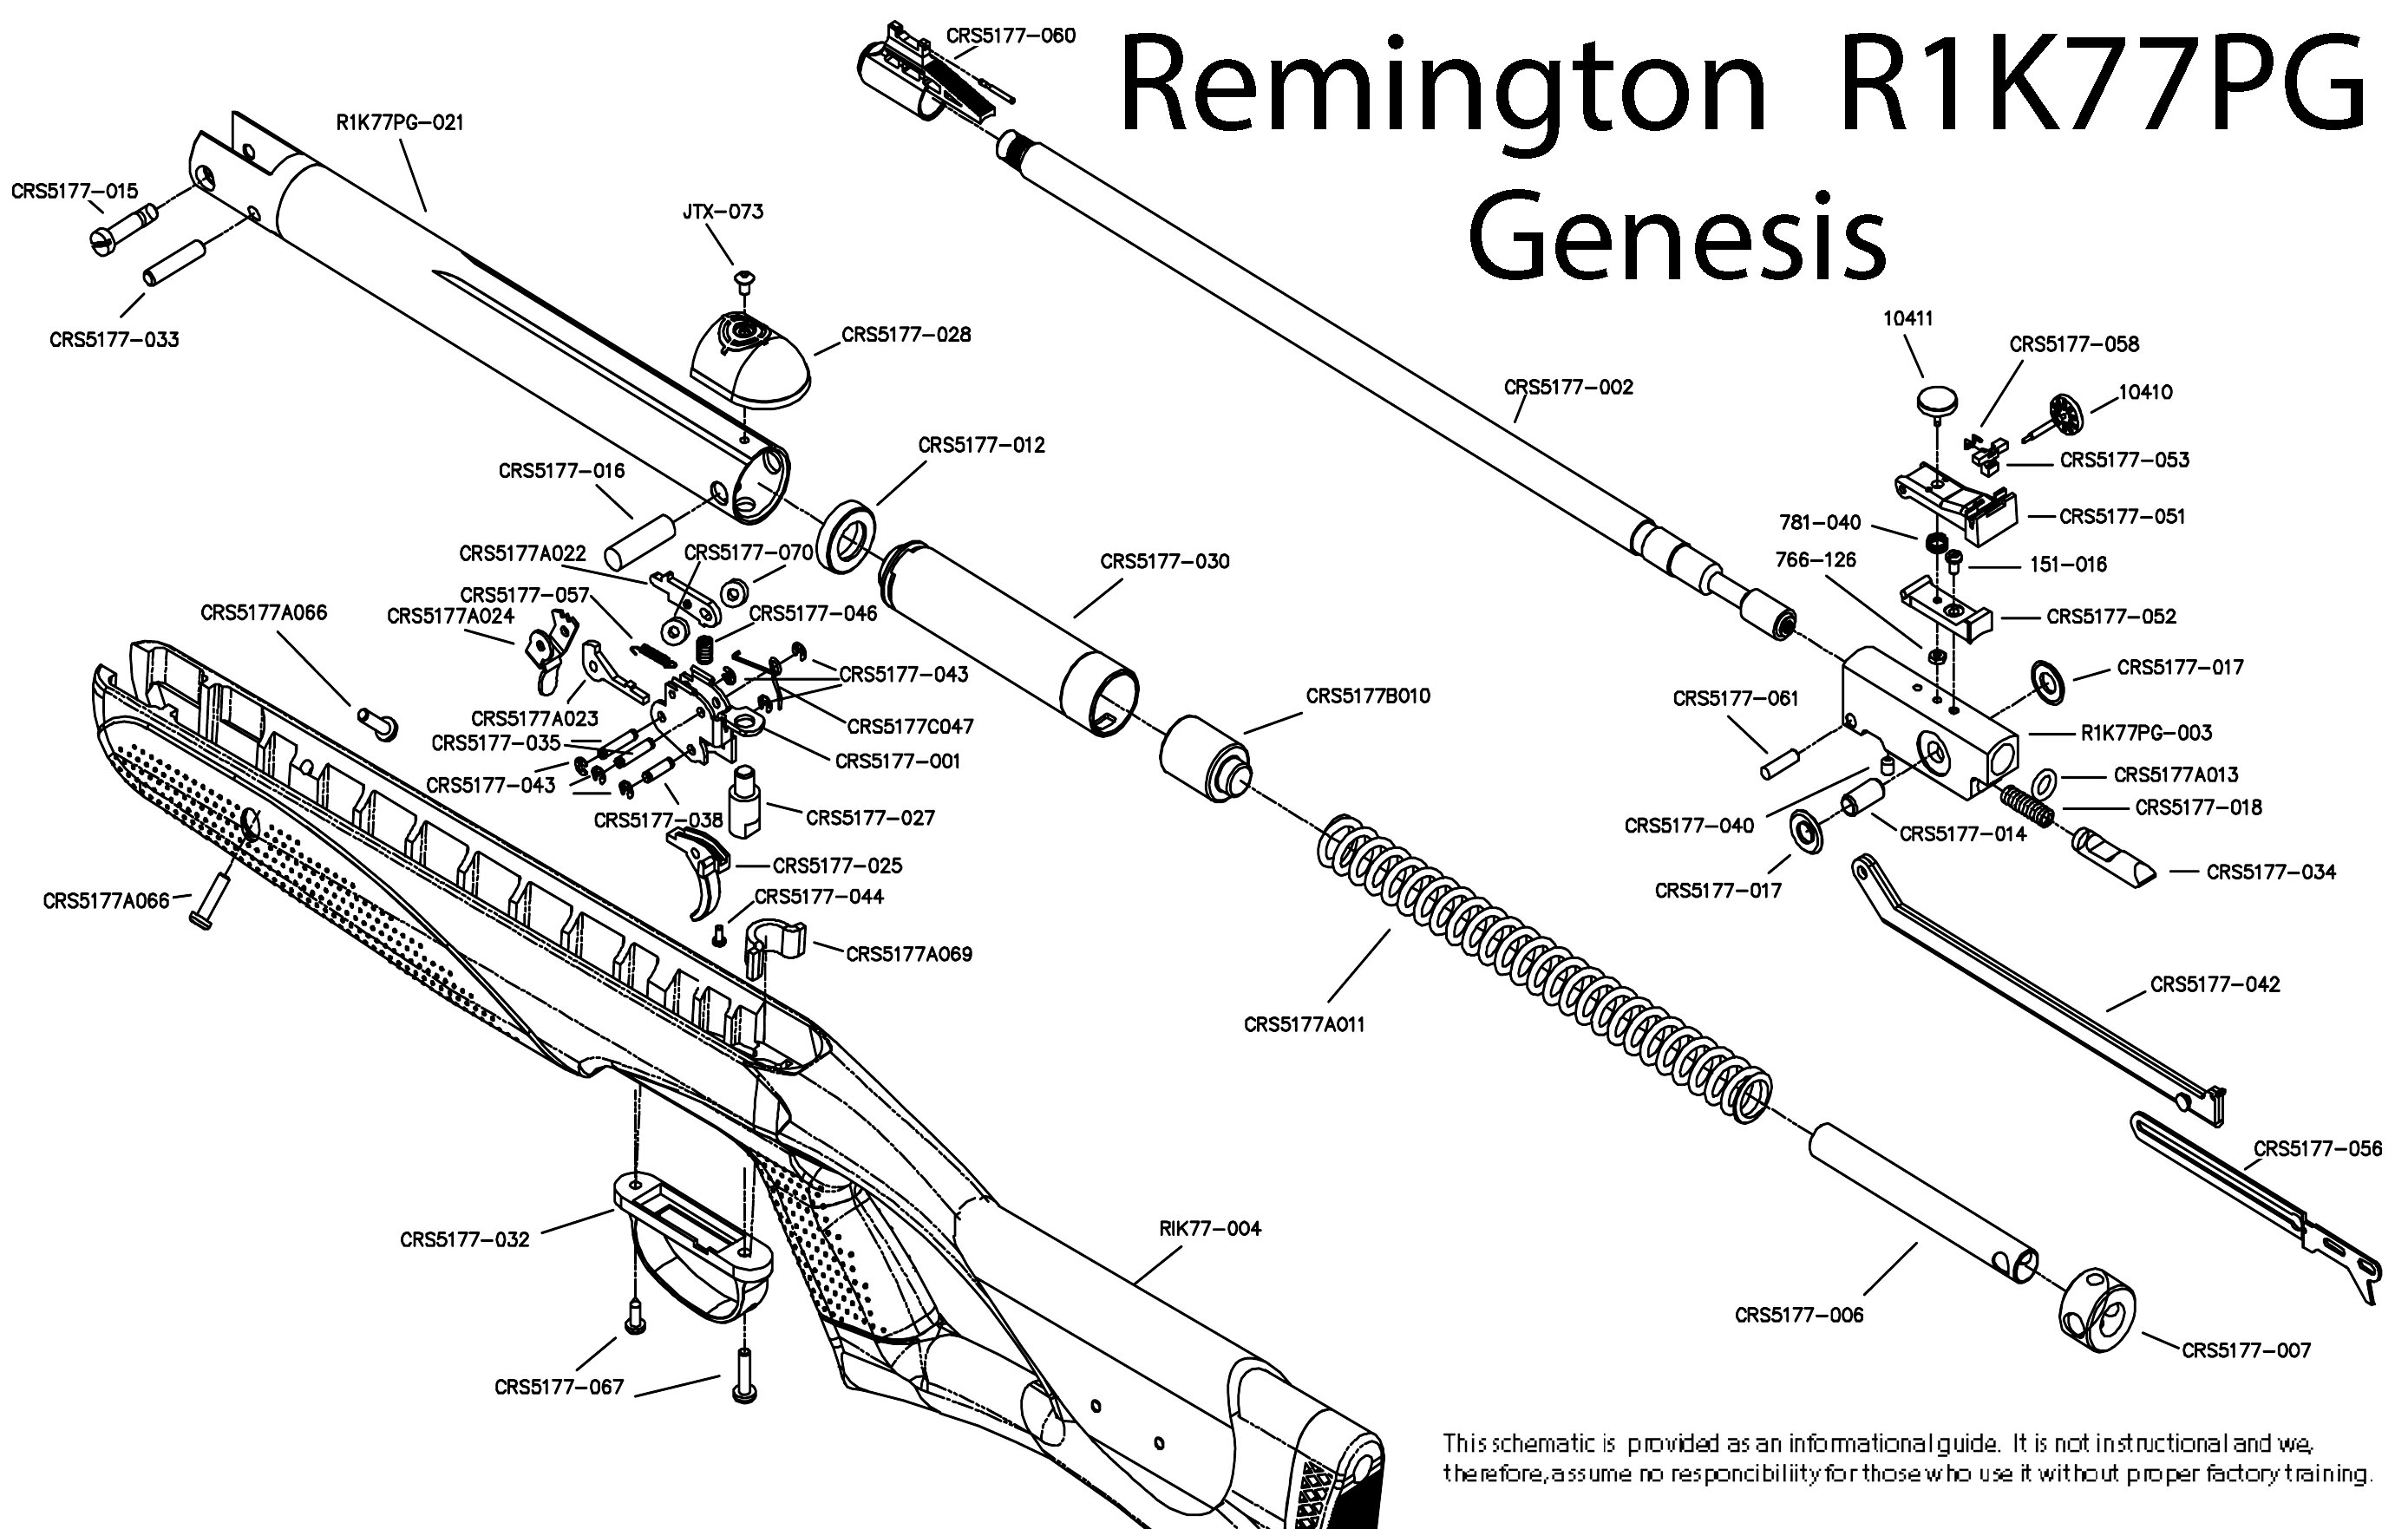 Genesis Schematic